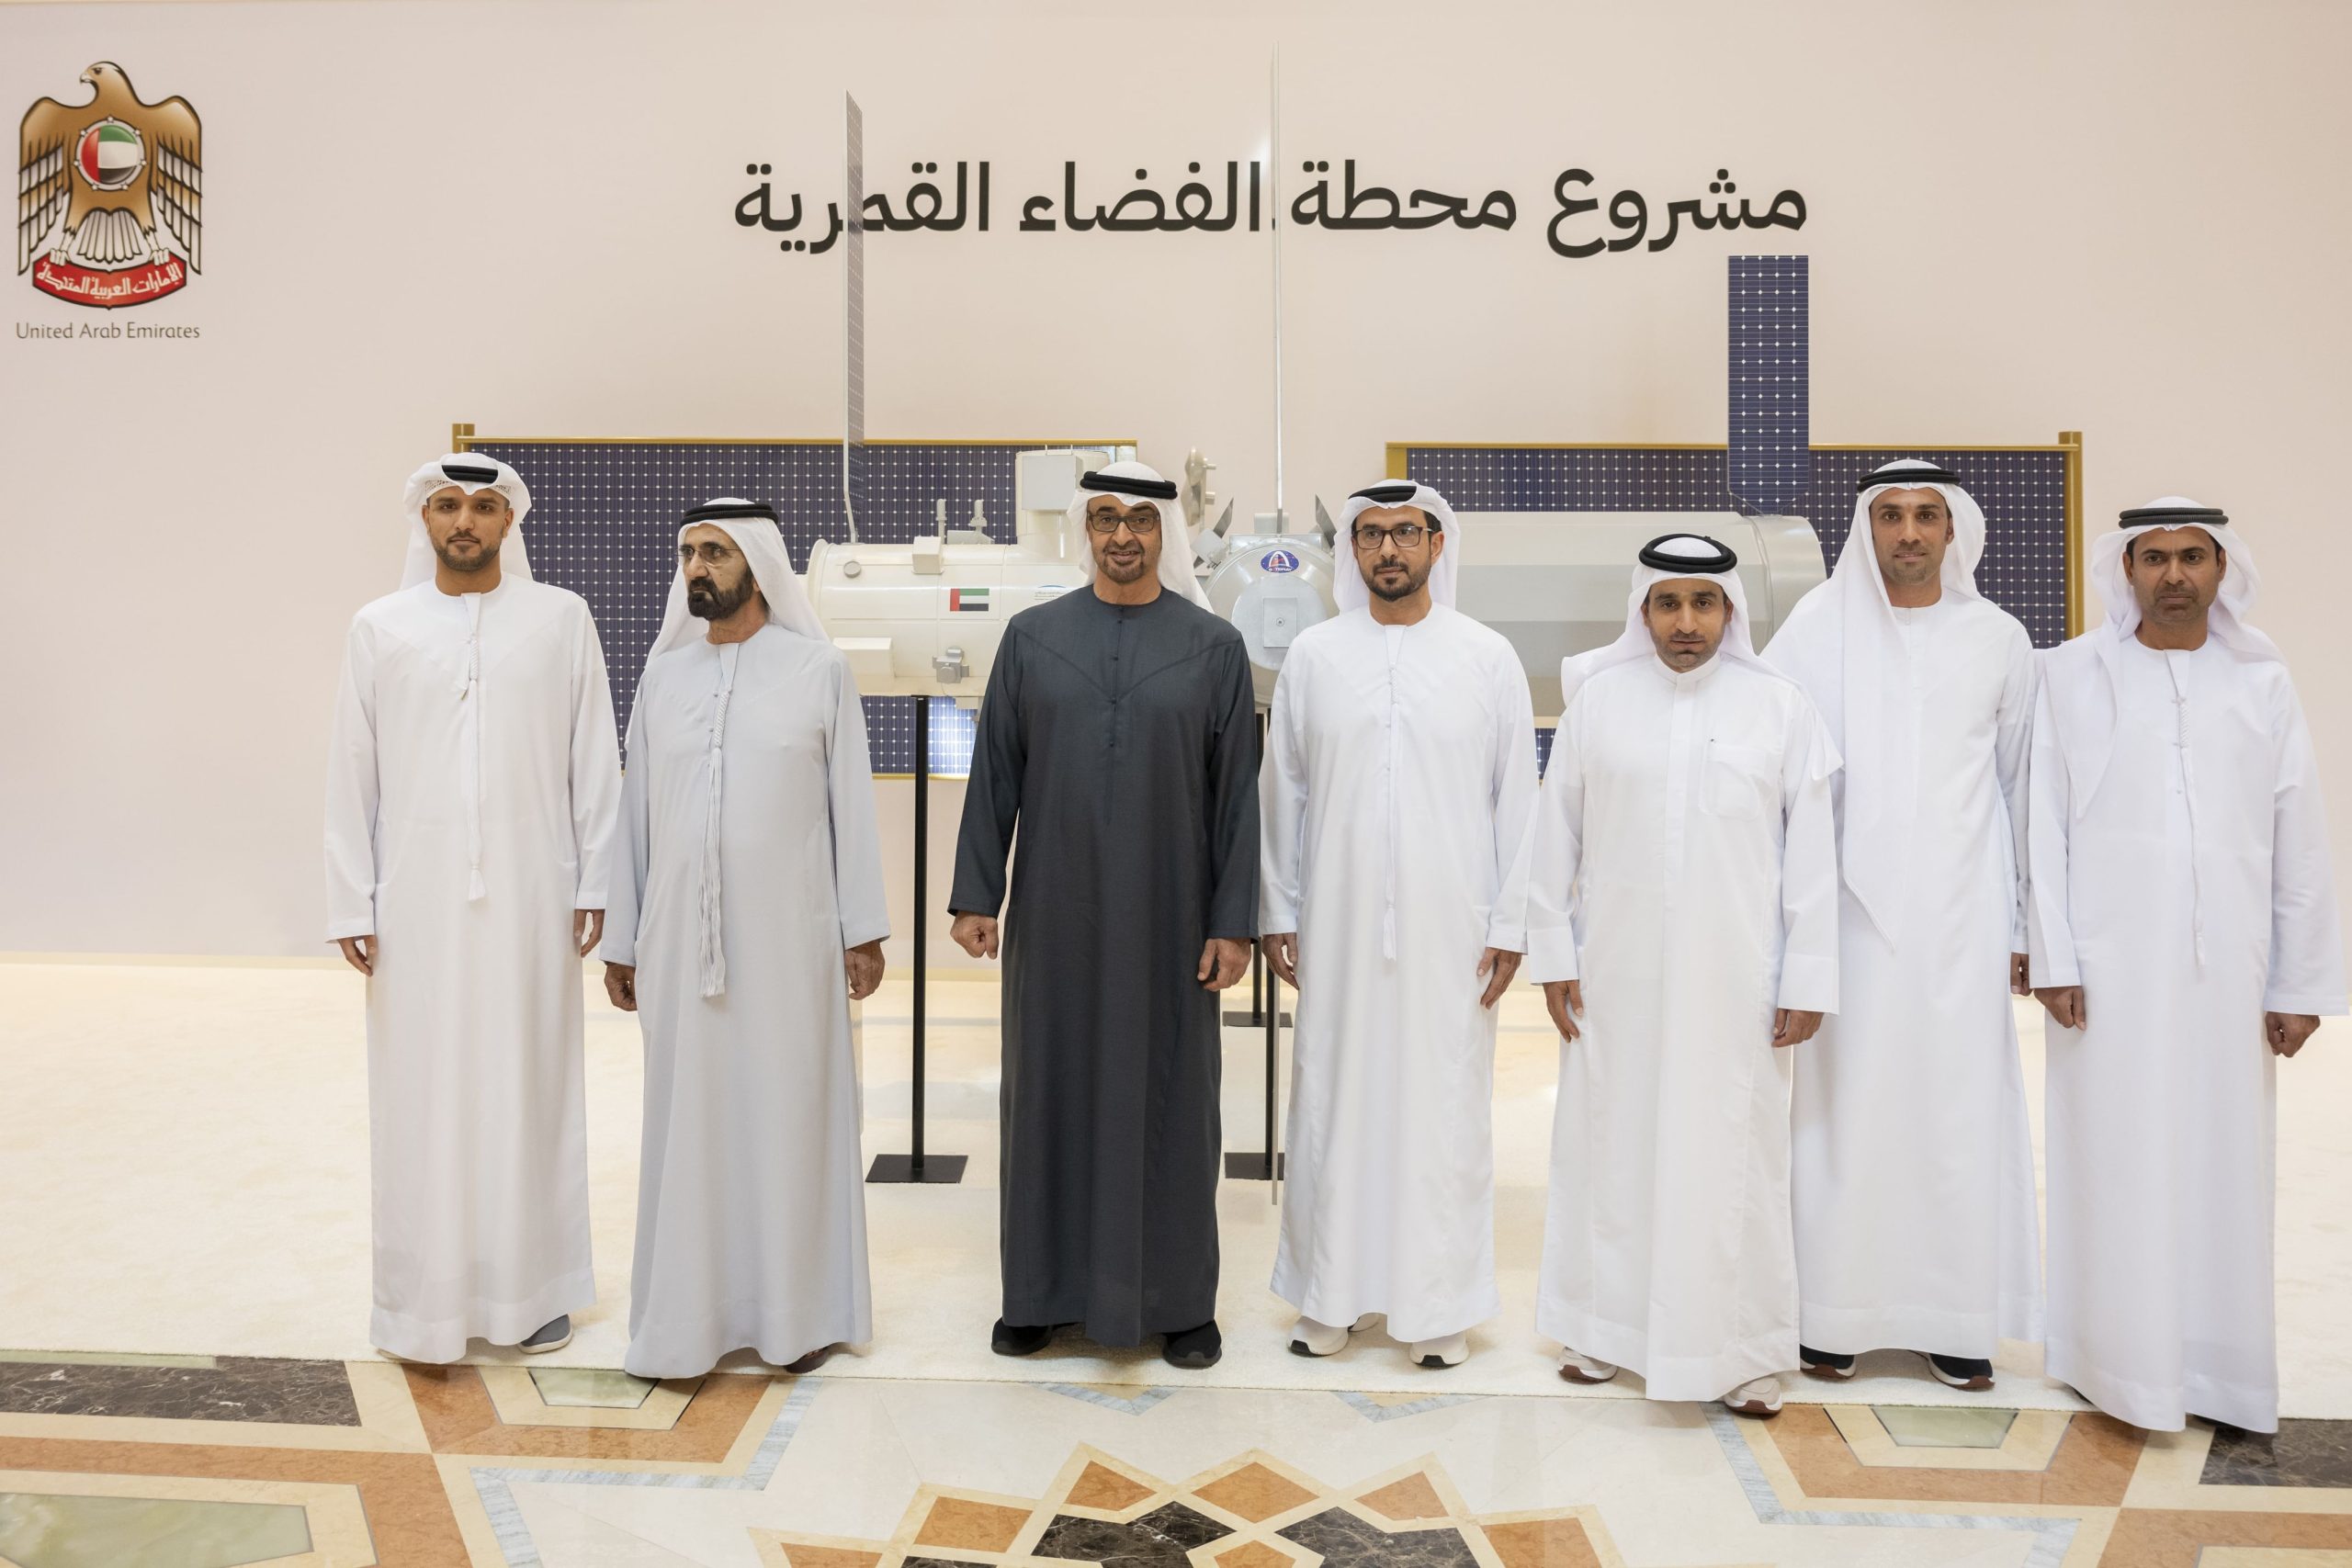 UAE to Participate in Lunar Gateway Station